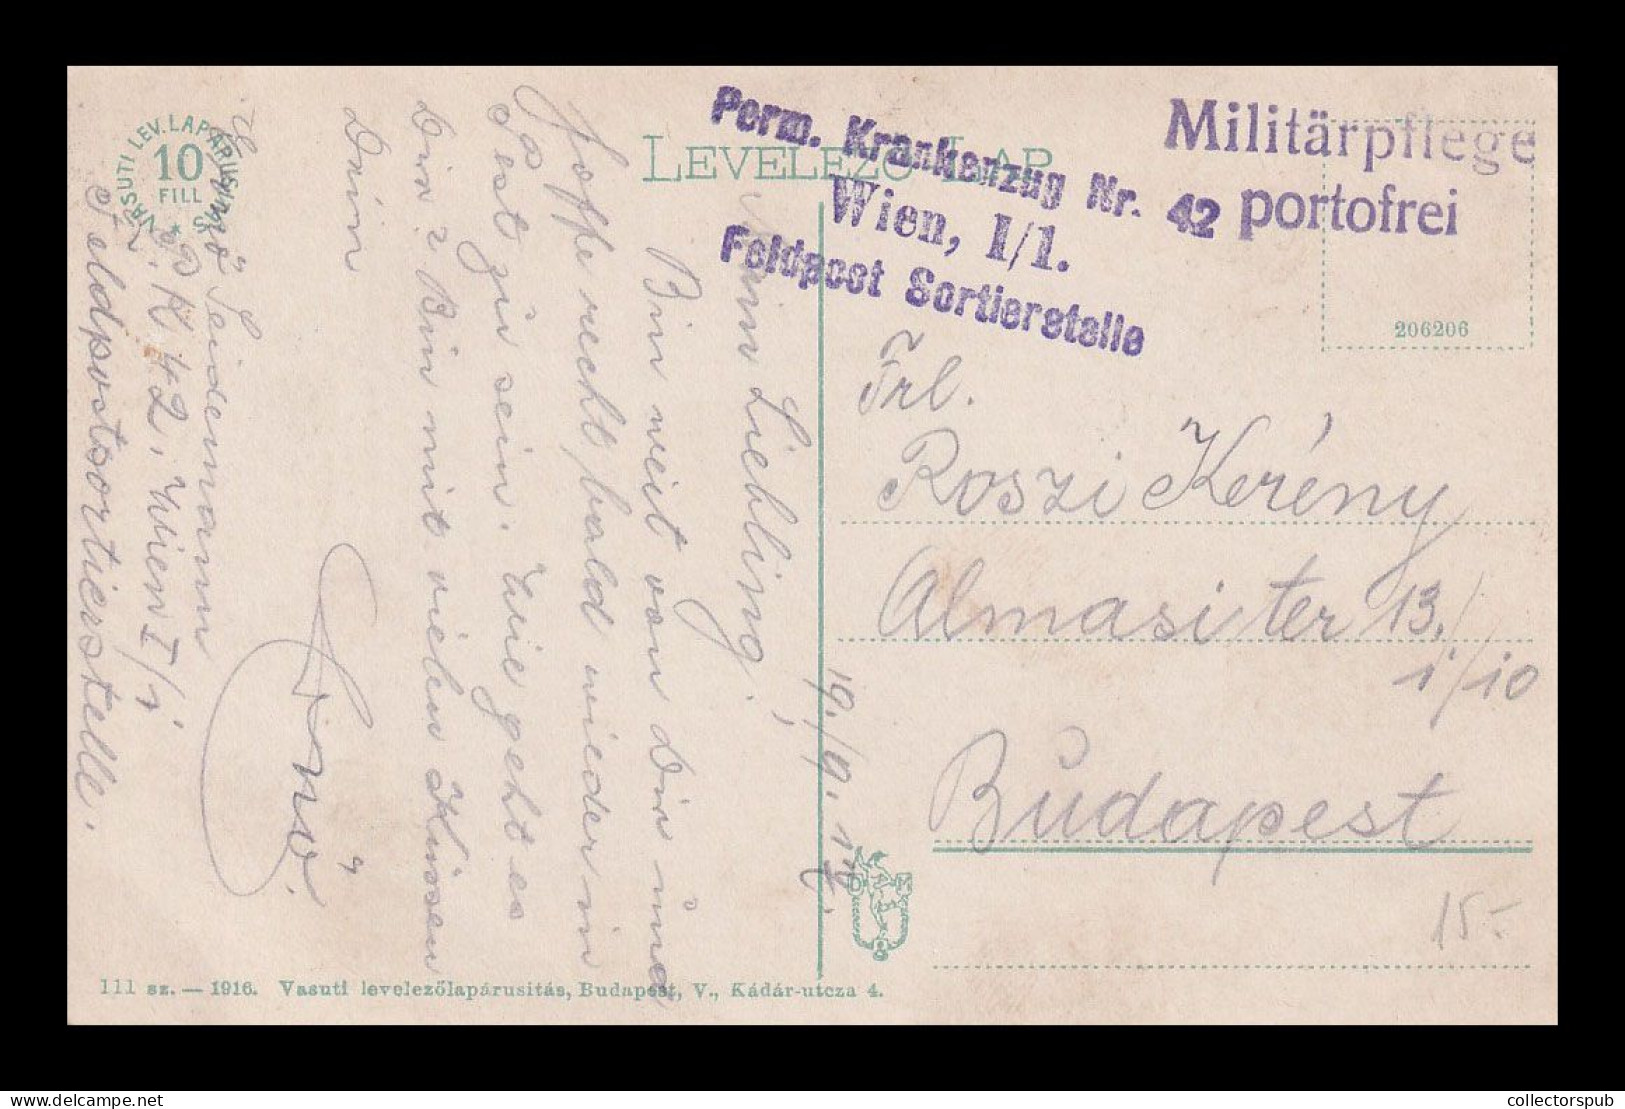 KOLOZSVÁR WWI Vintage Postcard With Fieldpost 1917. - Hungary